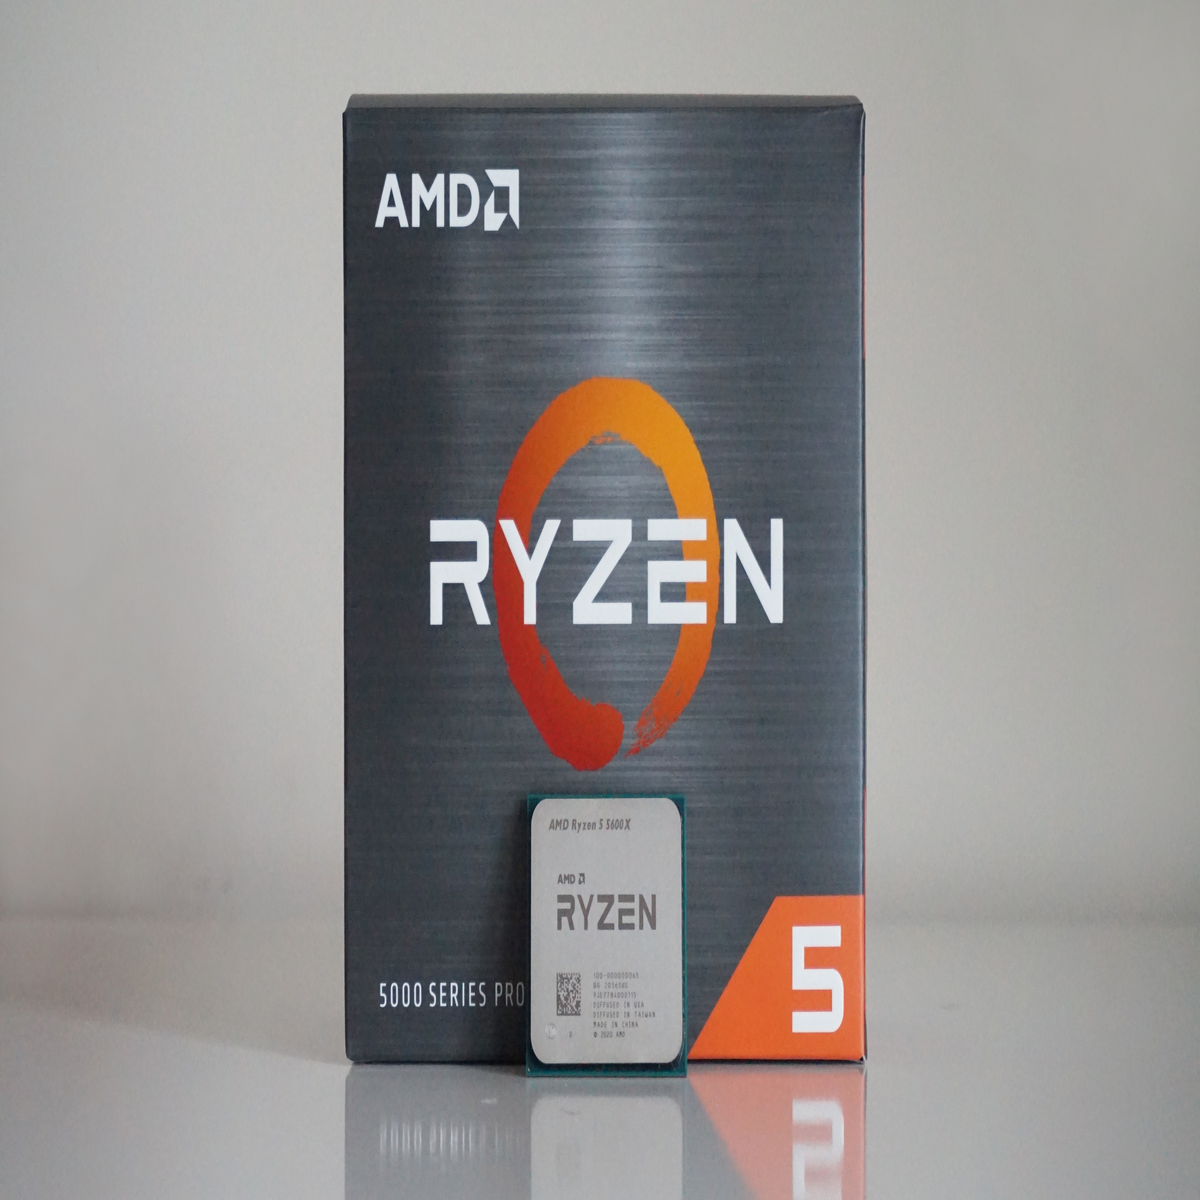 AMD's excellent Ryzen 5 5600X processor is currently half-price on